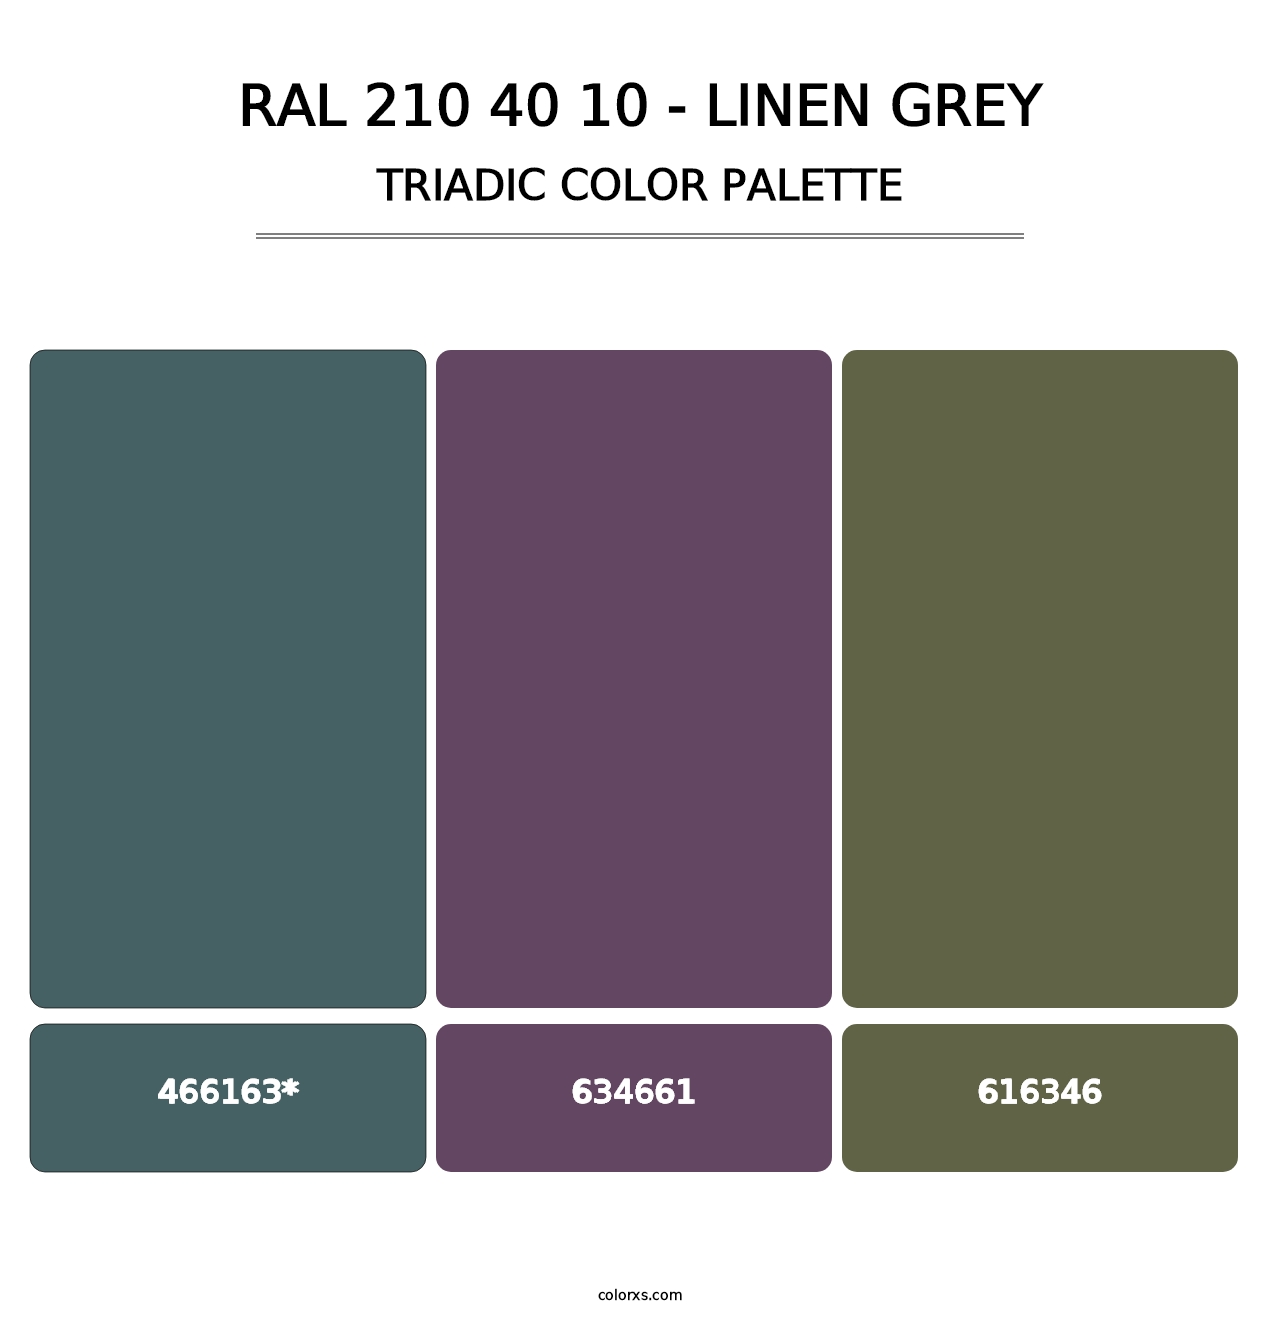 RAL 210 40 10 - Linen Grey - Triadic Color Palette